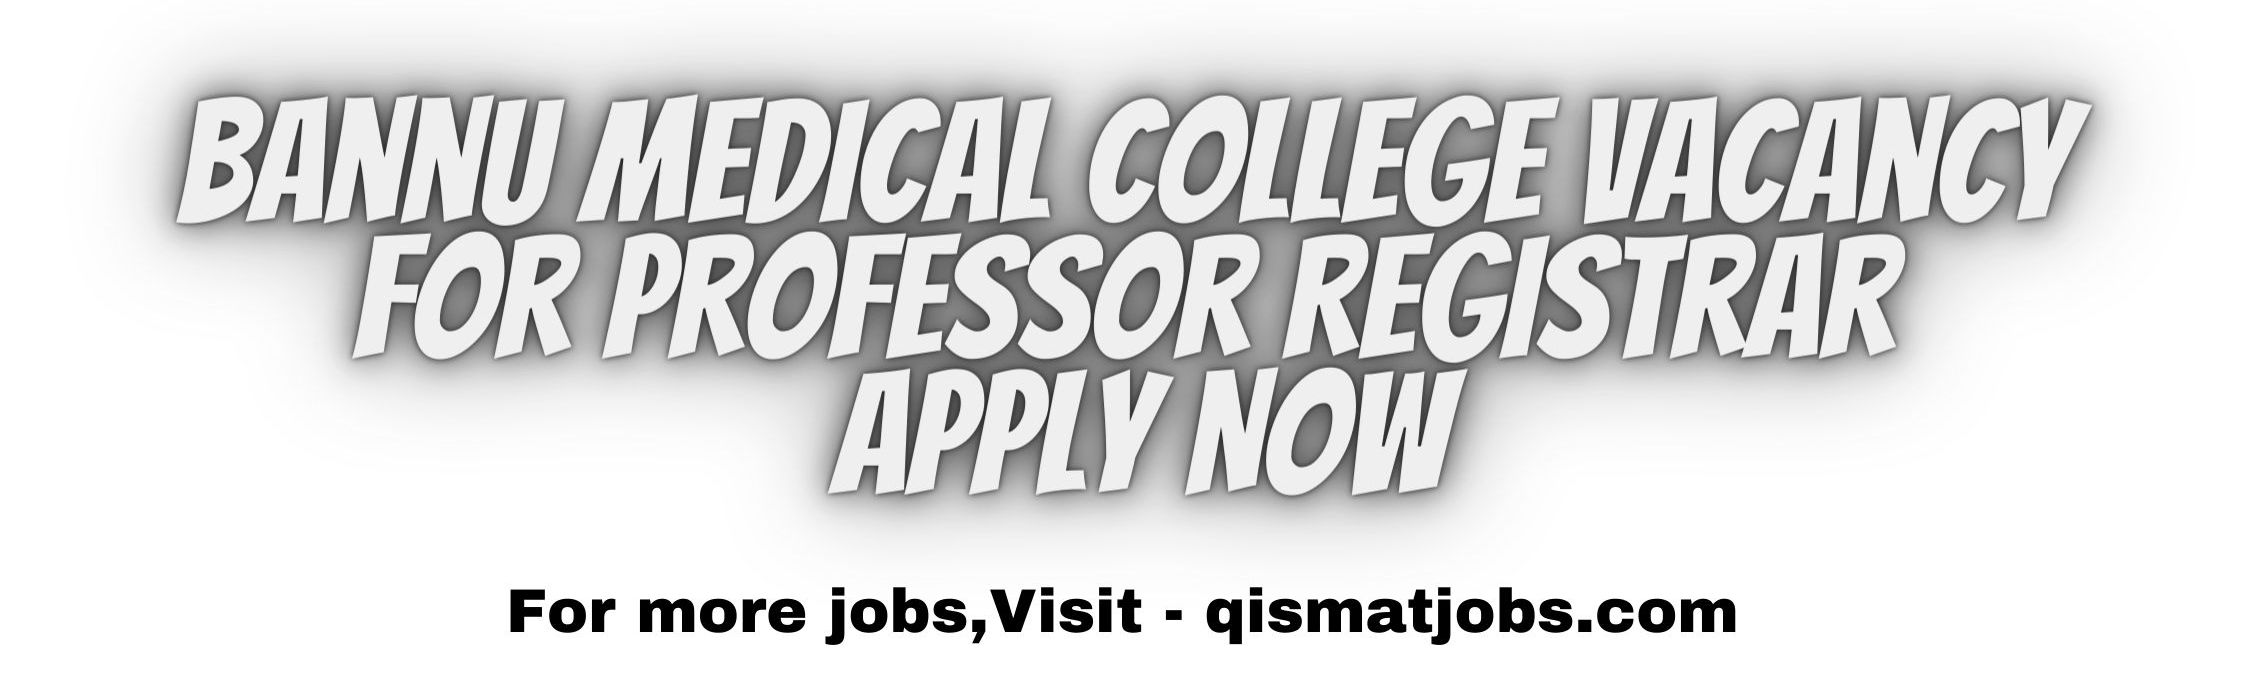 Bannu Medical College Vacancy For Professor Registrar | Apply Now